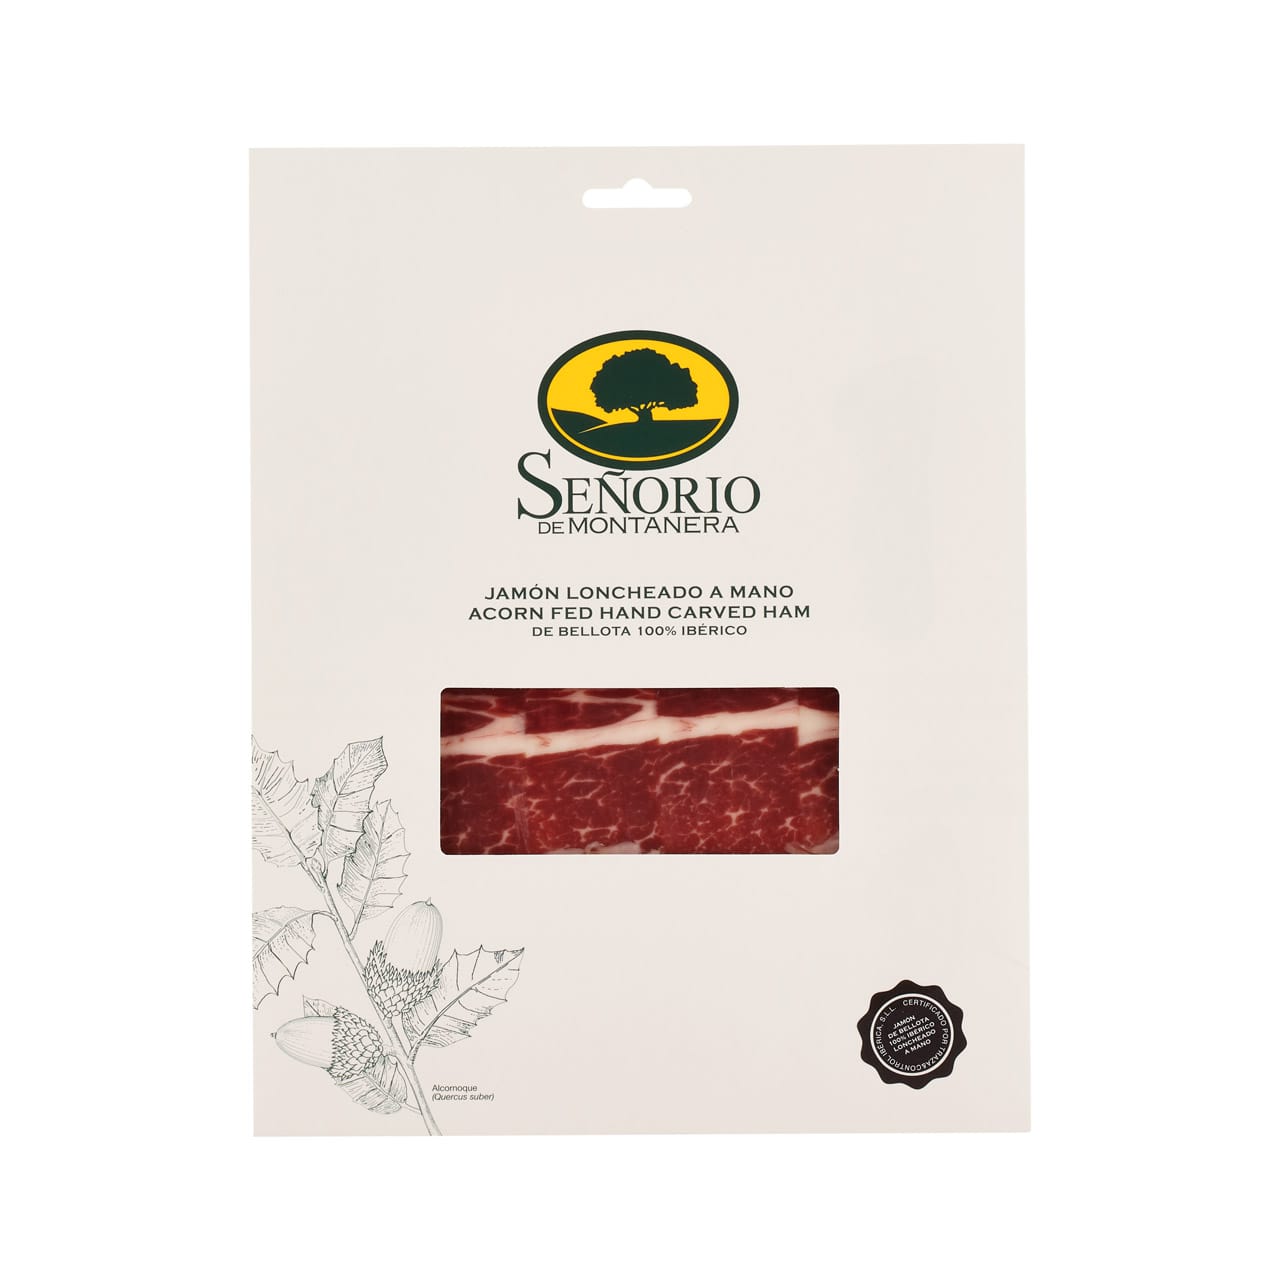 Senorio Bellota 100% Iberico Hand-Carved Ham DOP 50g